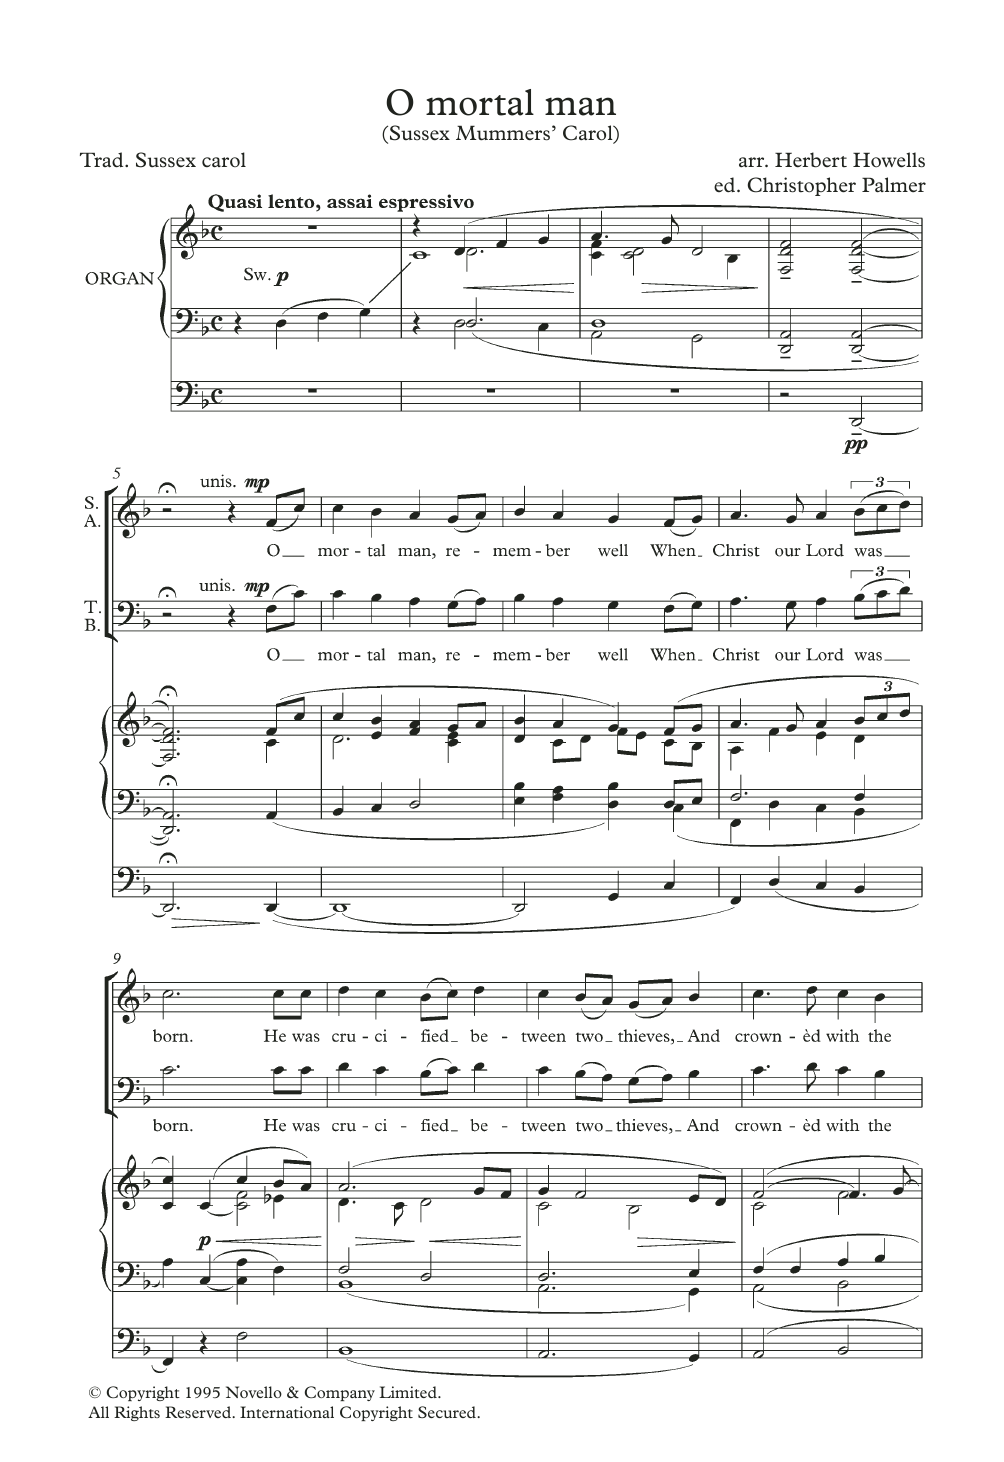 Download Traditional Carol O Mortal Man (Sussex Mummers' Carol) (a Sheet Music